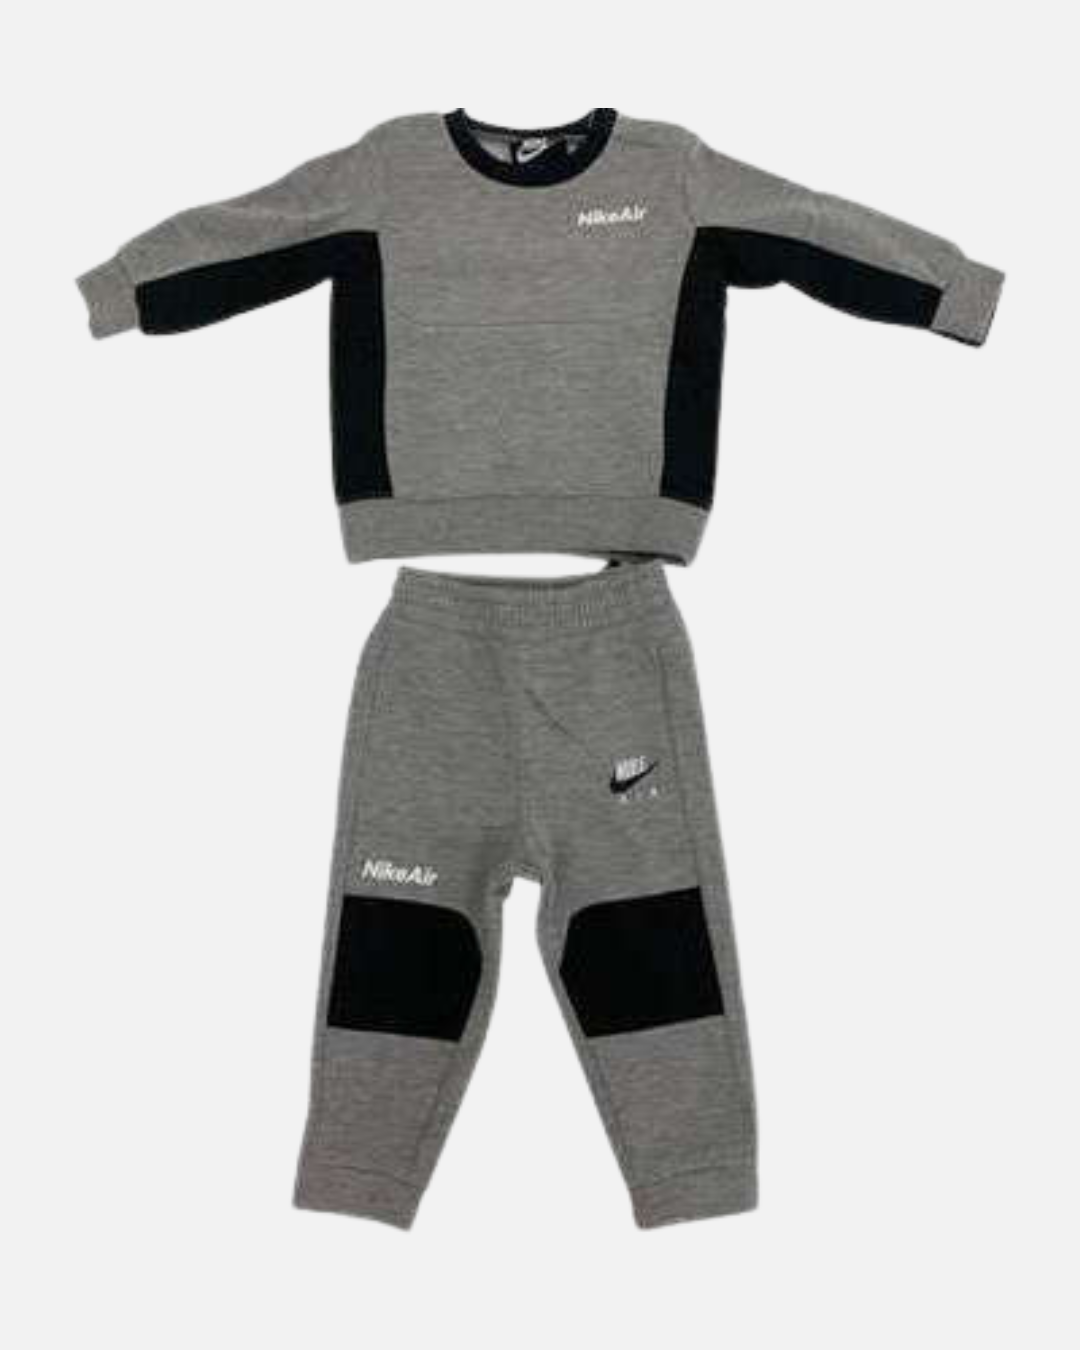 Nike Air Crew Baby Set - Black/Grey